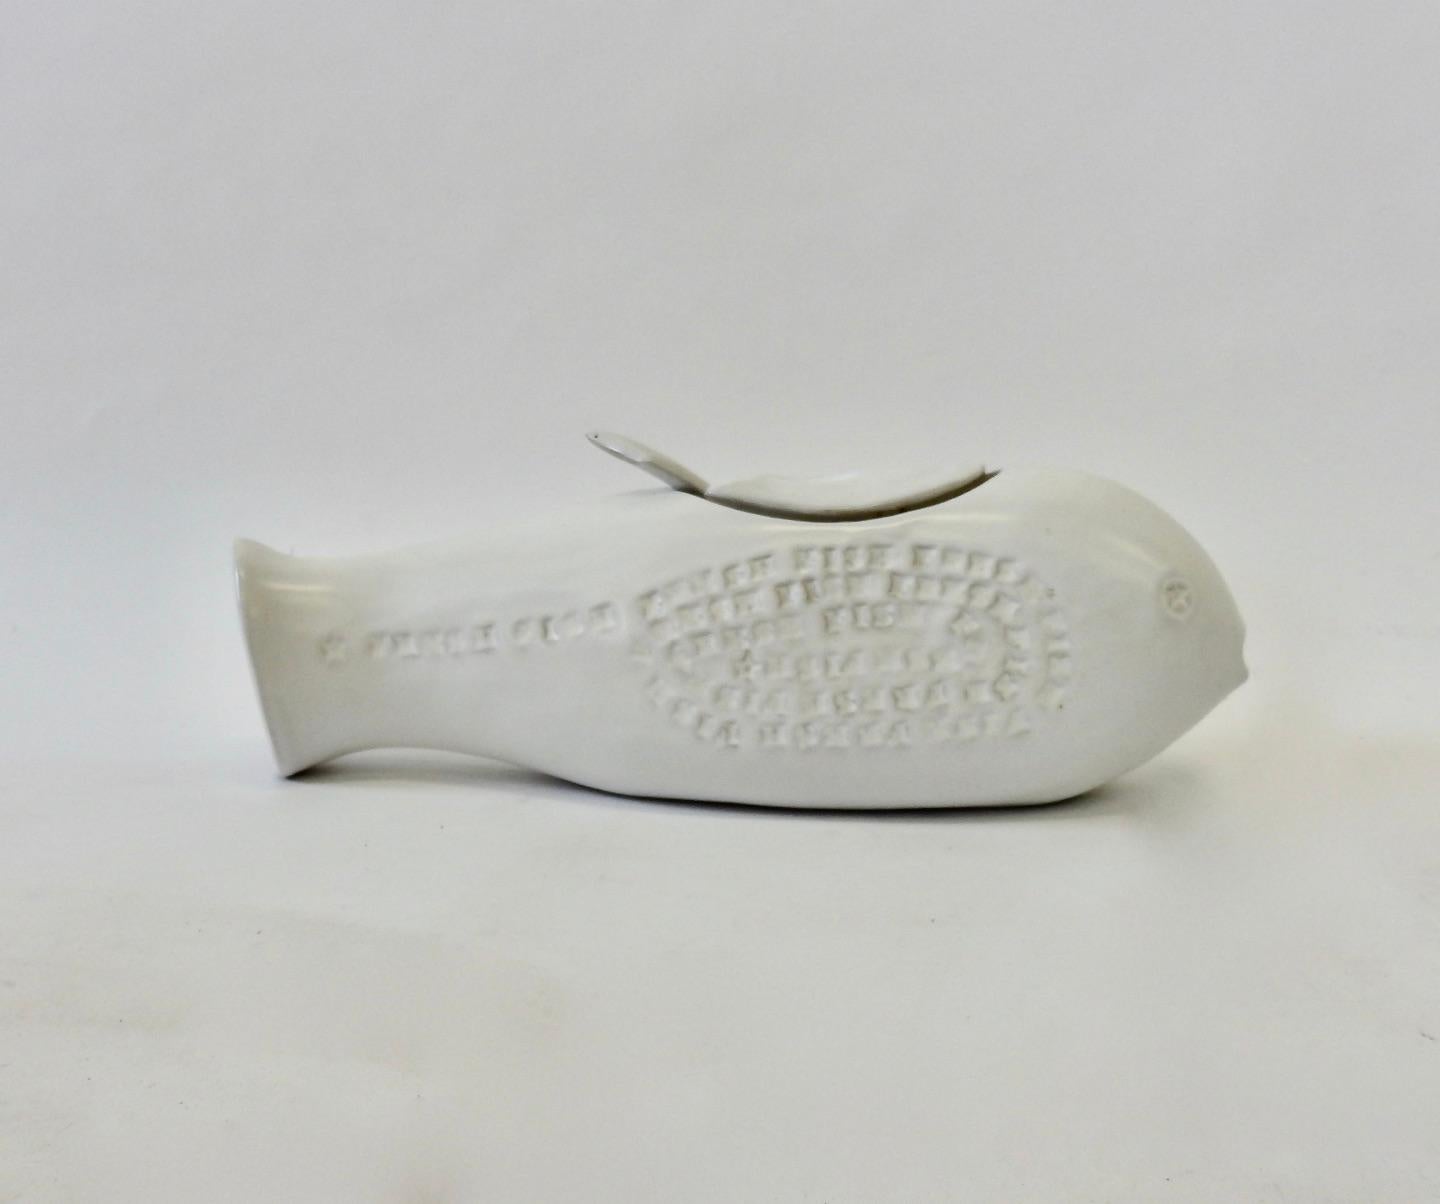 Quite rare Bennington Pottery fish shaped tureen with original ladle all in matte white glaze.